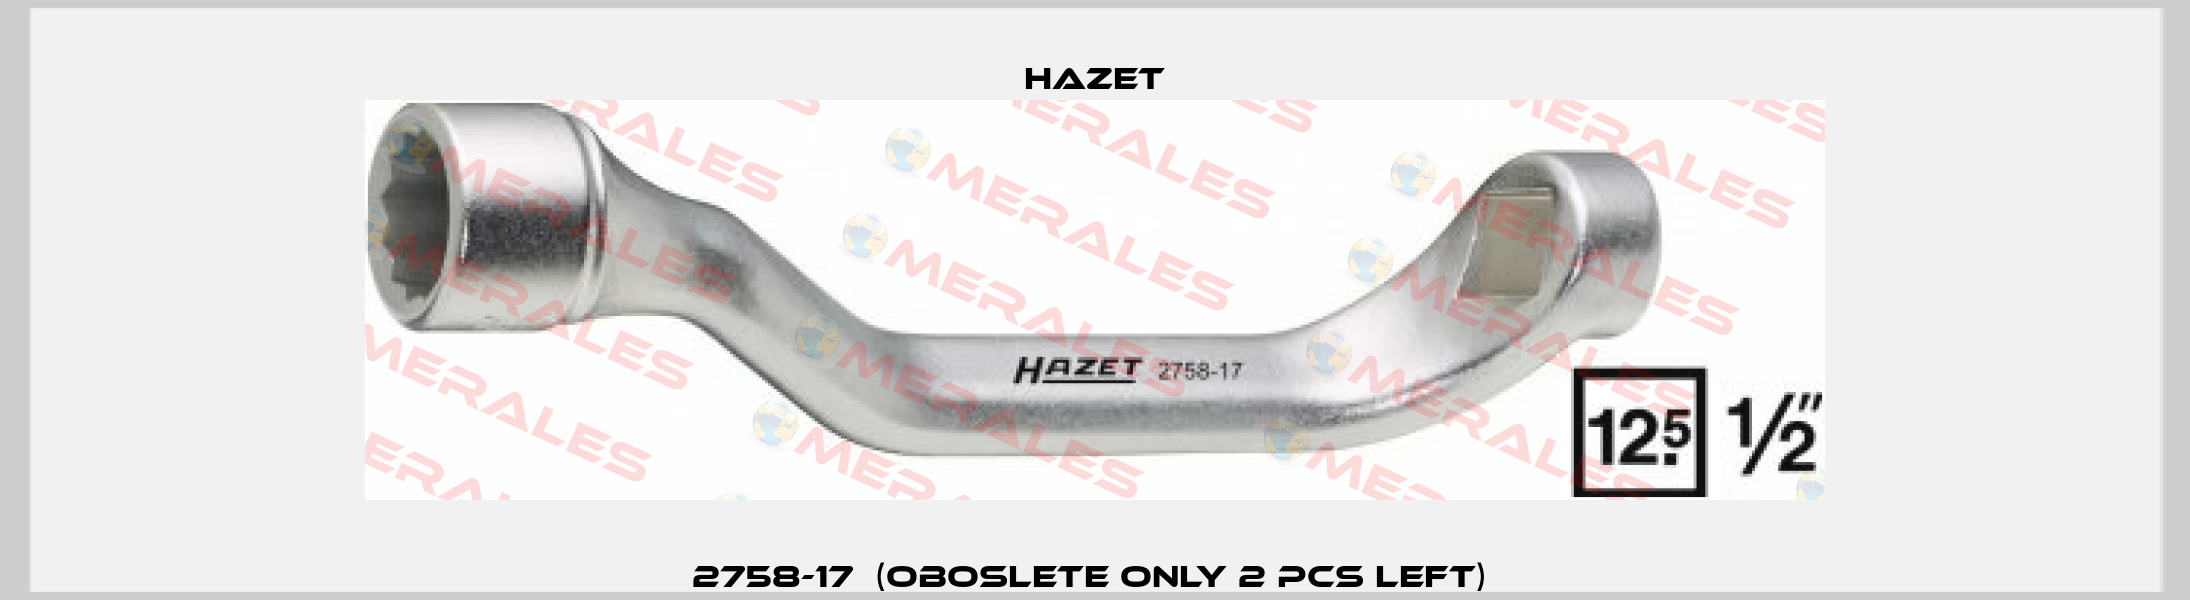 2758-17  (oboslete only 2 pcs left)  Hazet